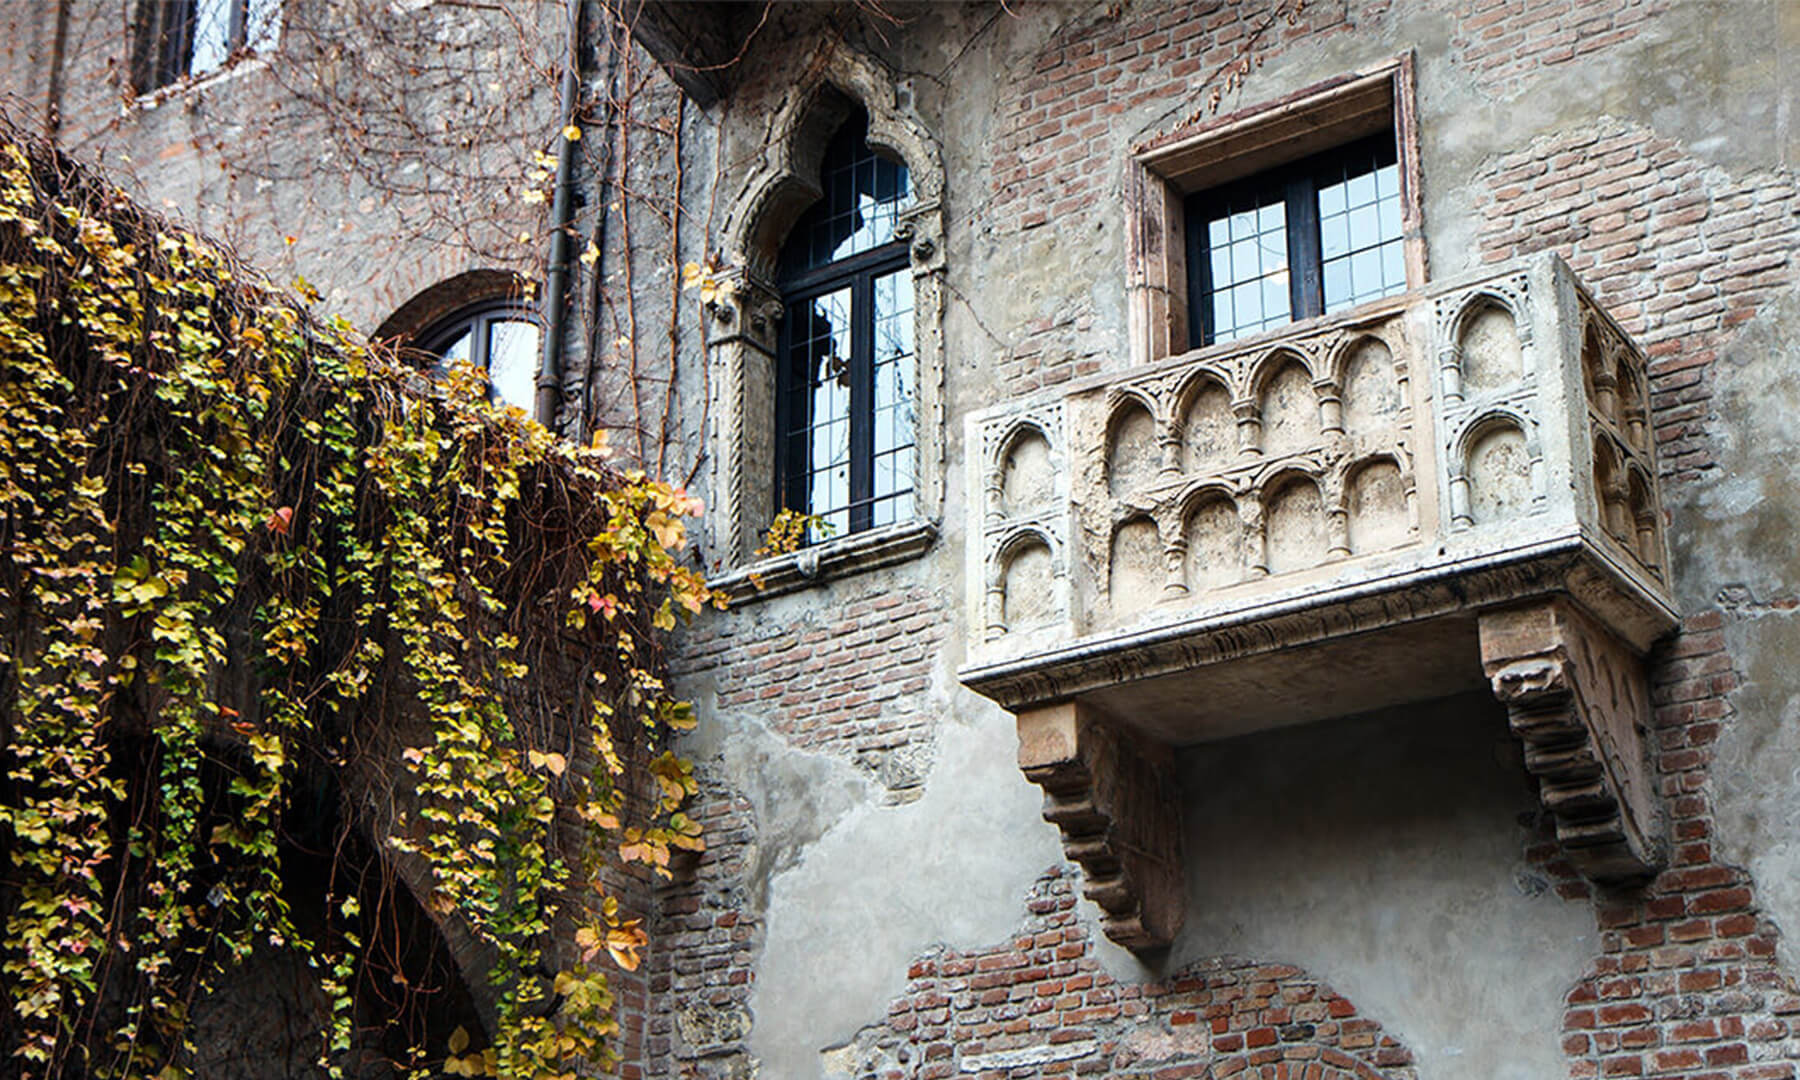 Romeo and Juliet balcony in Verona - Italy. Credit: juergen2008